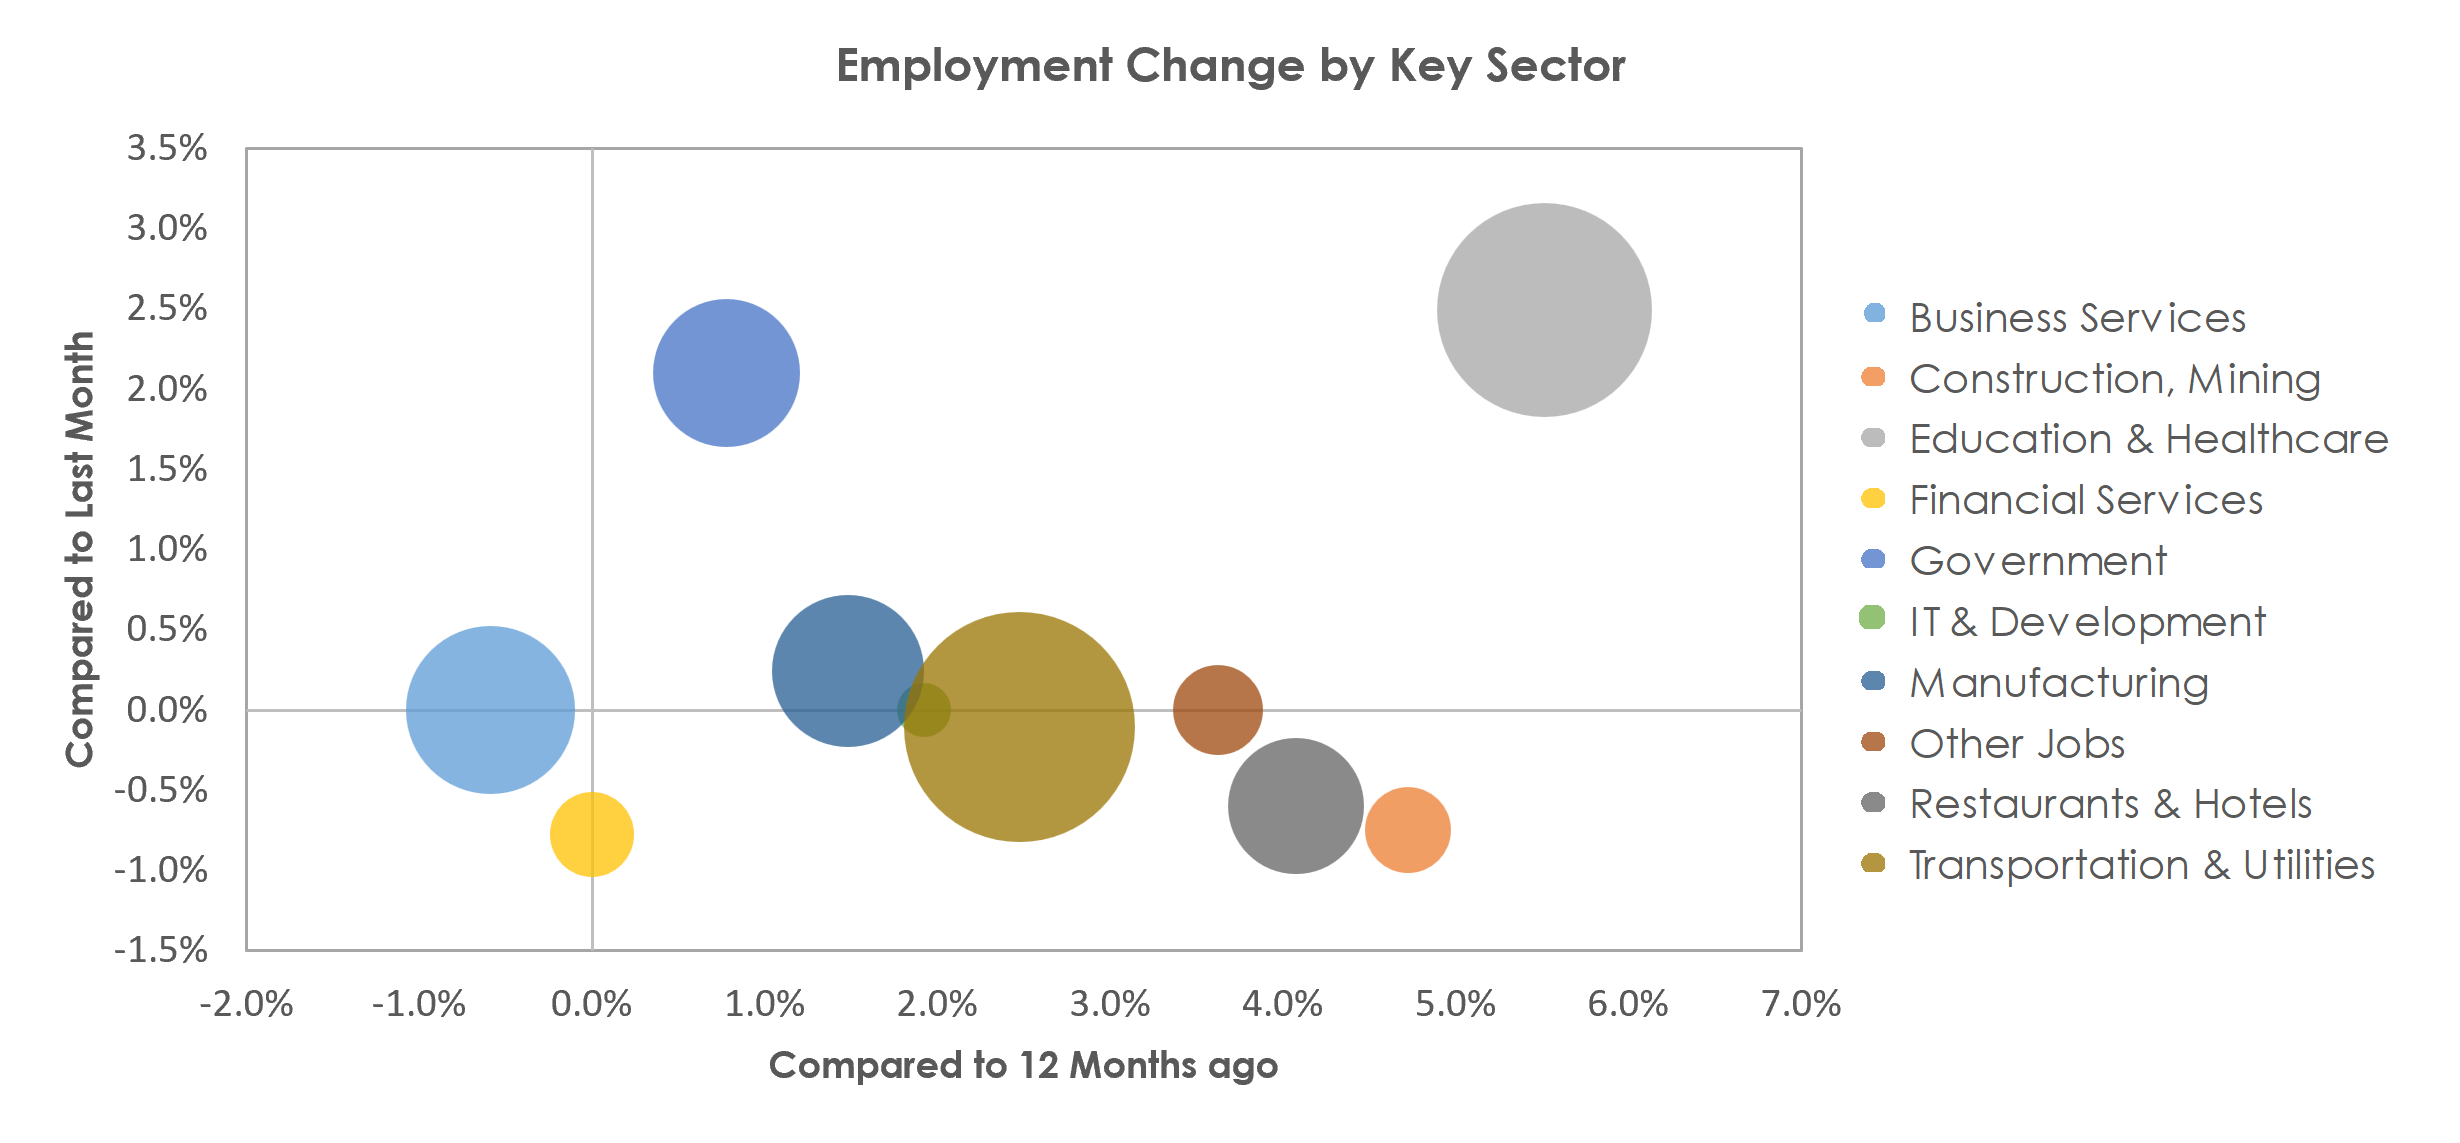 Allentown-Bethlehem-Easton, PA-NJ Unemployment by Industry February 2023